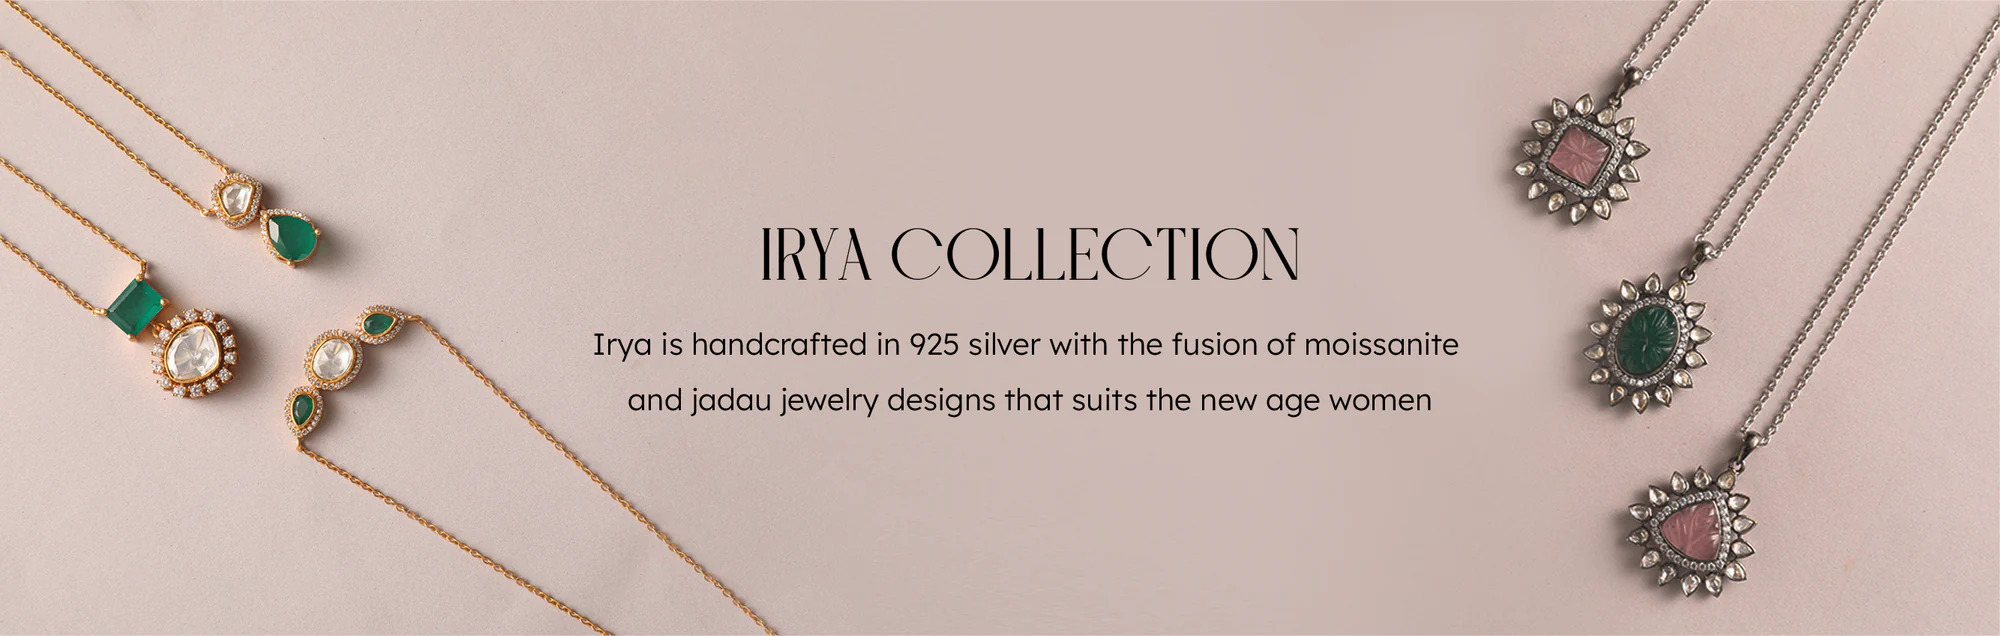 Irya Collection